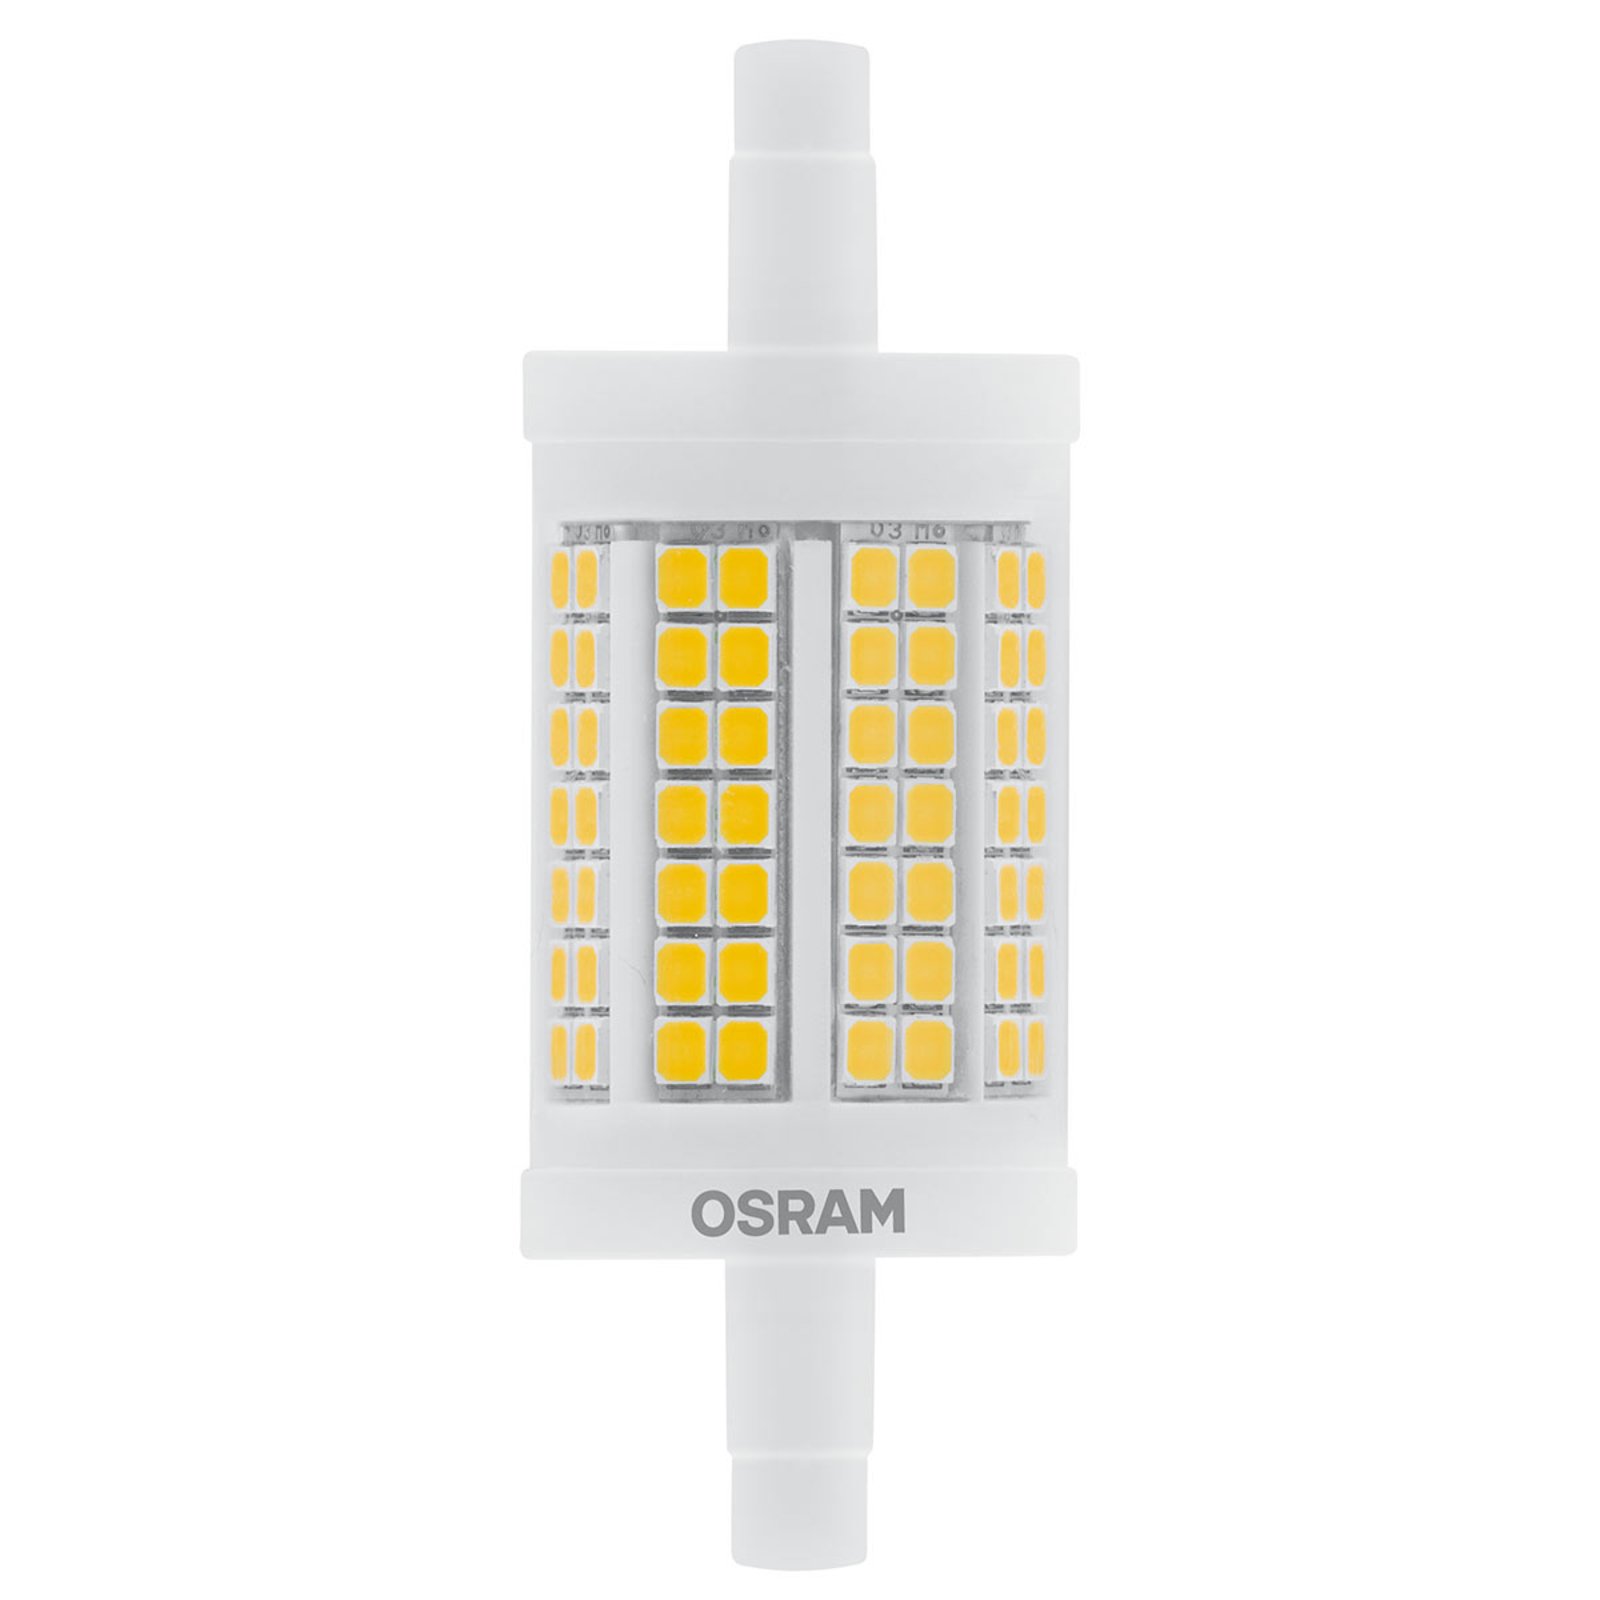 OSRAM bombilla tubular LED R7s 12W 7,8cm 827 dim